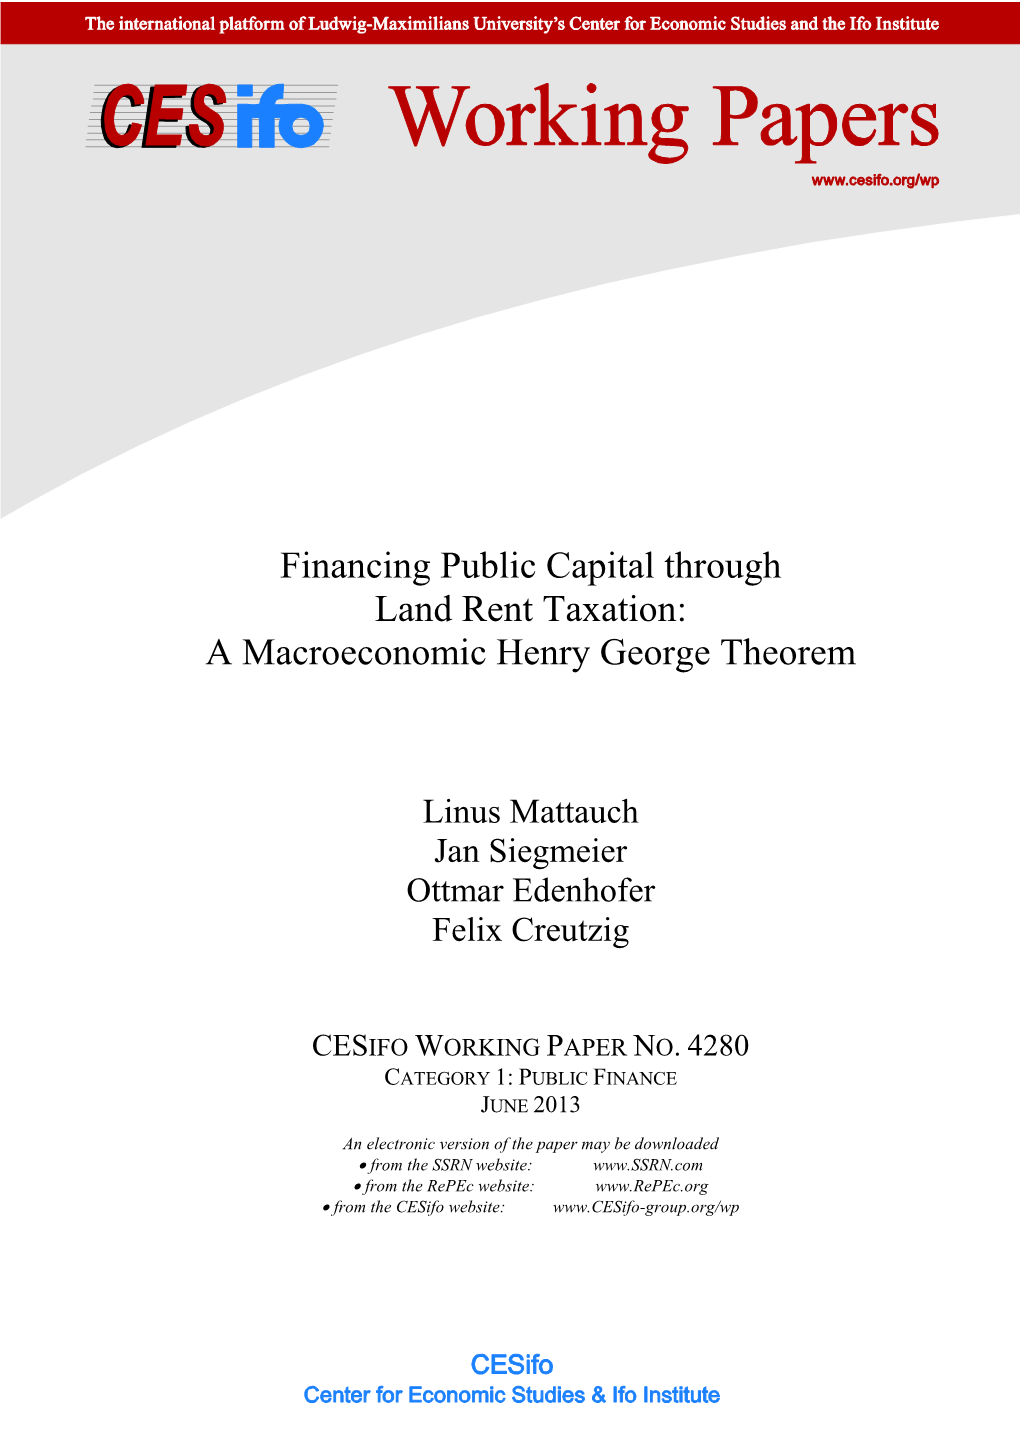 A Macroeconomic Henry George Theorem